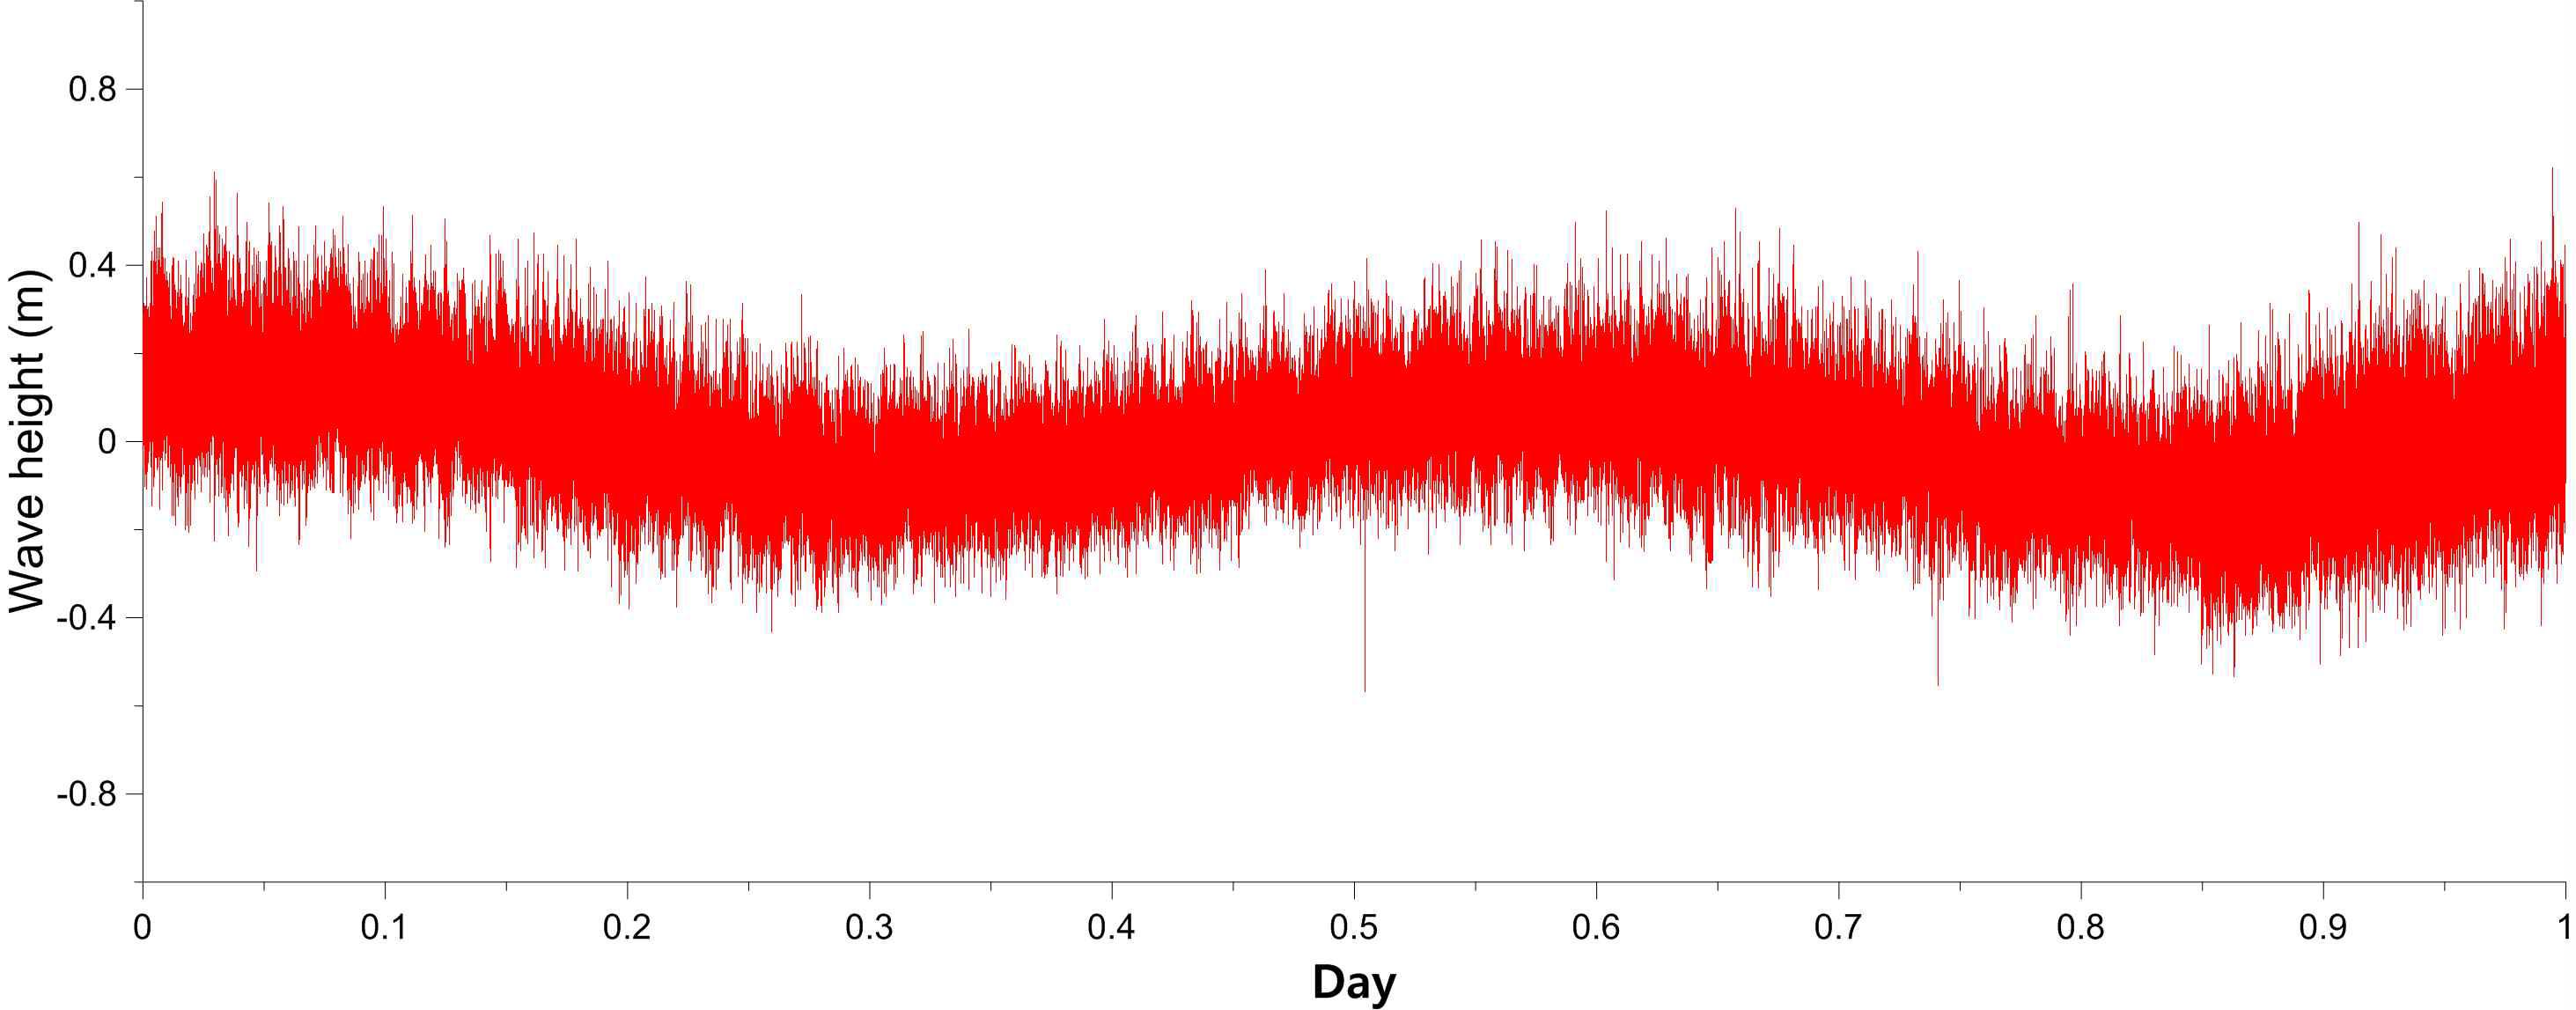 Wave data observed at WG2